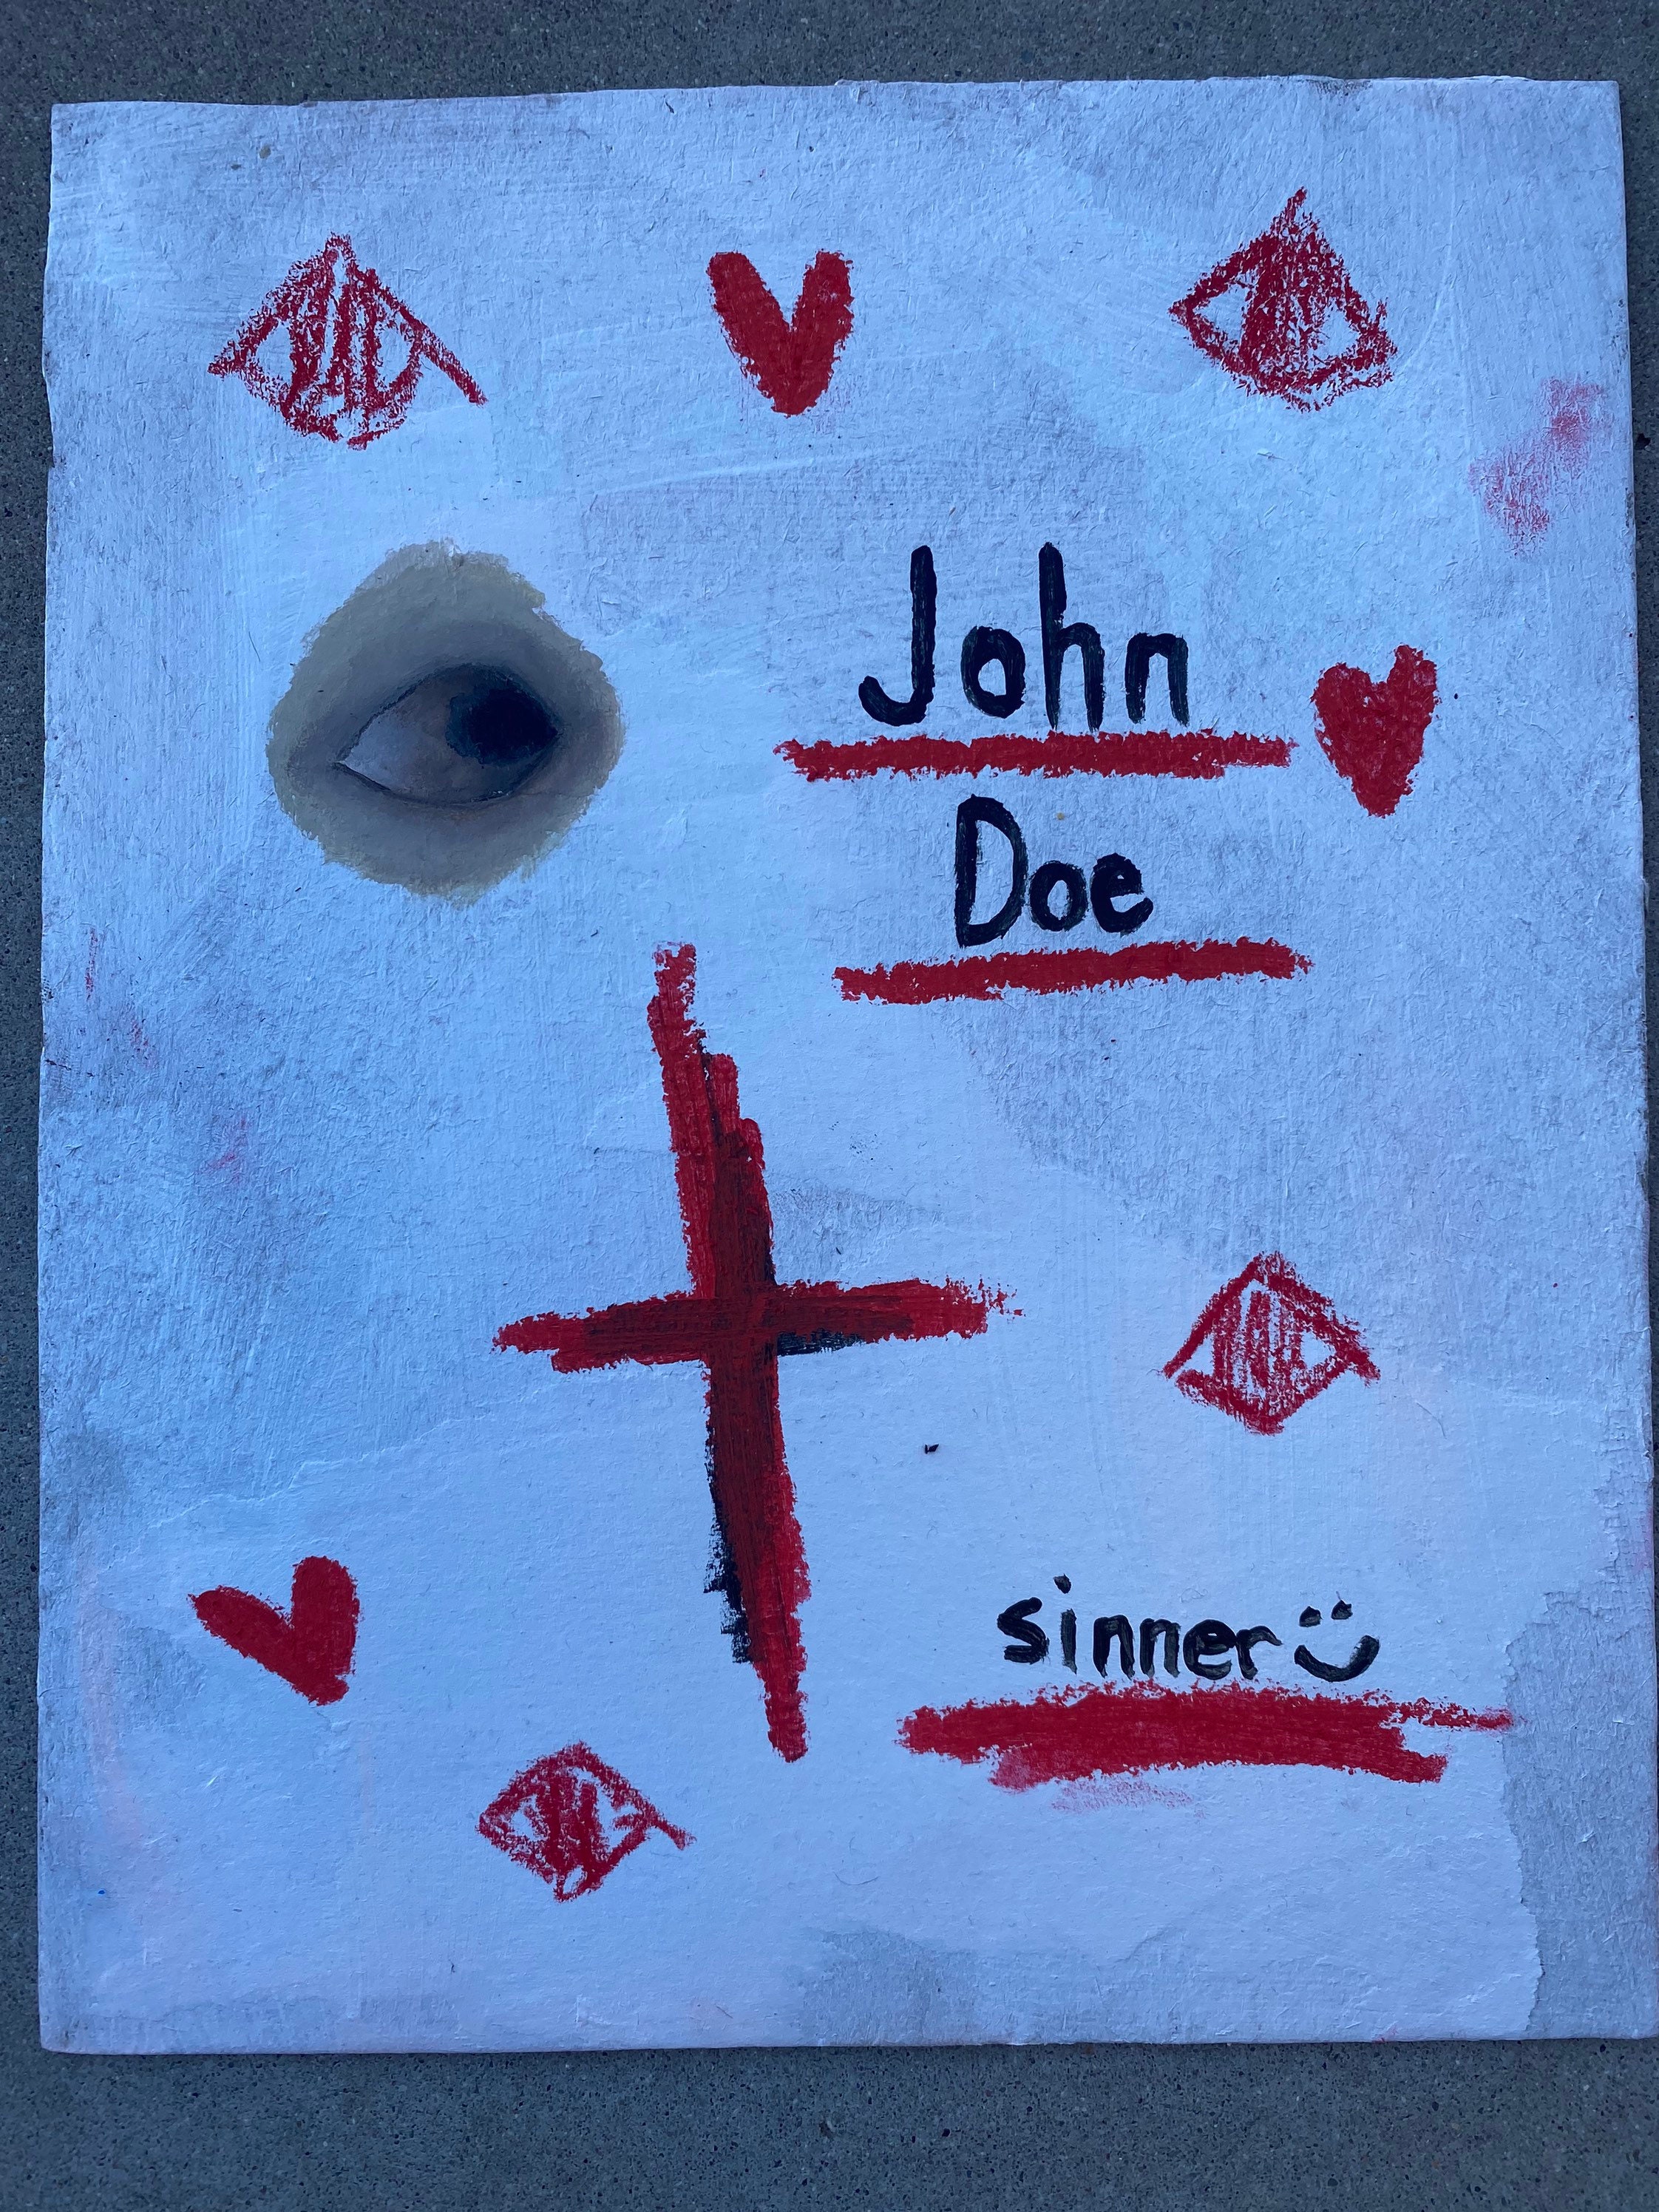 john doe Sticker for Sale by myartforyou12